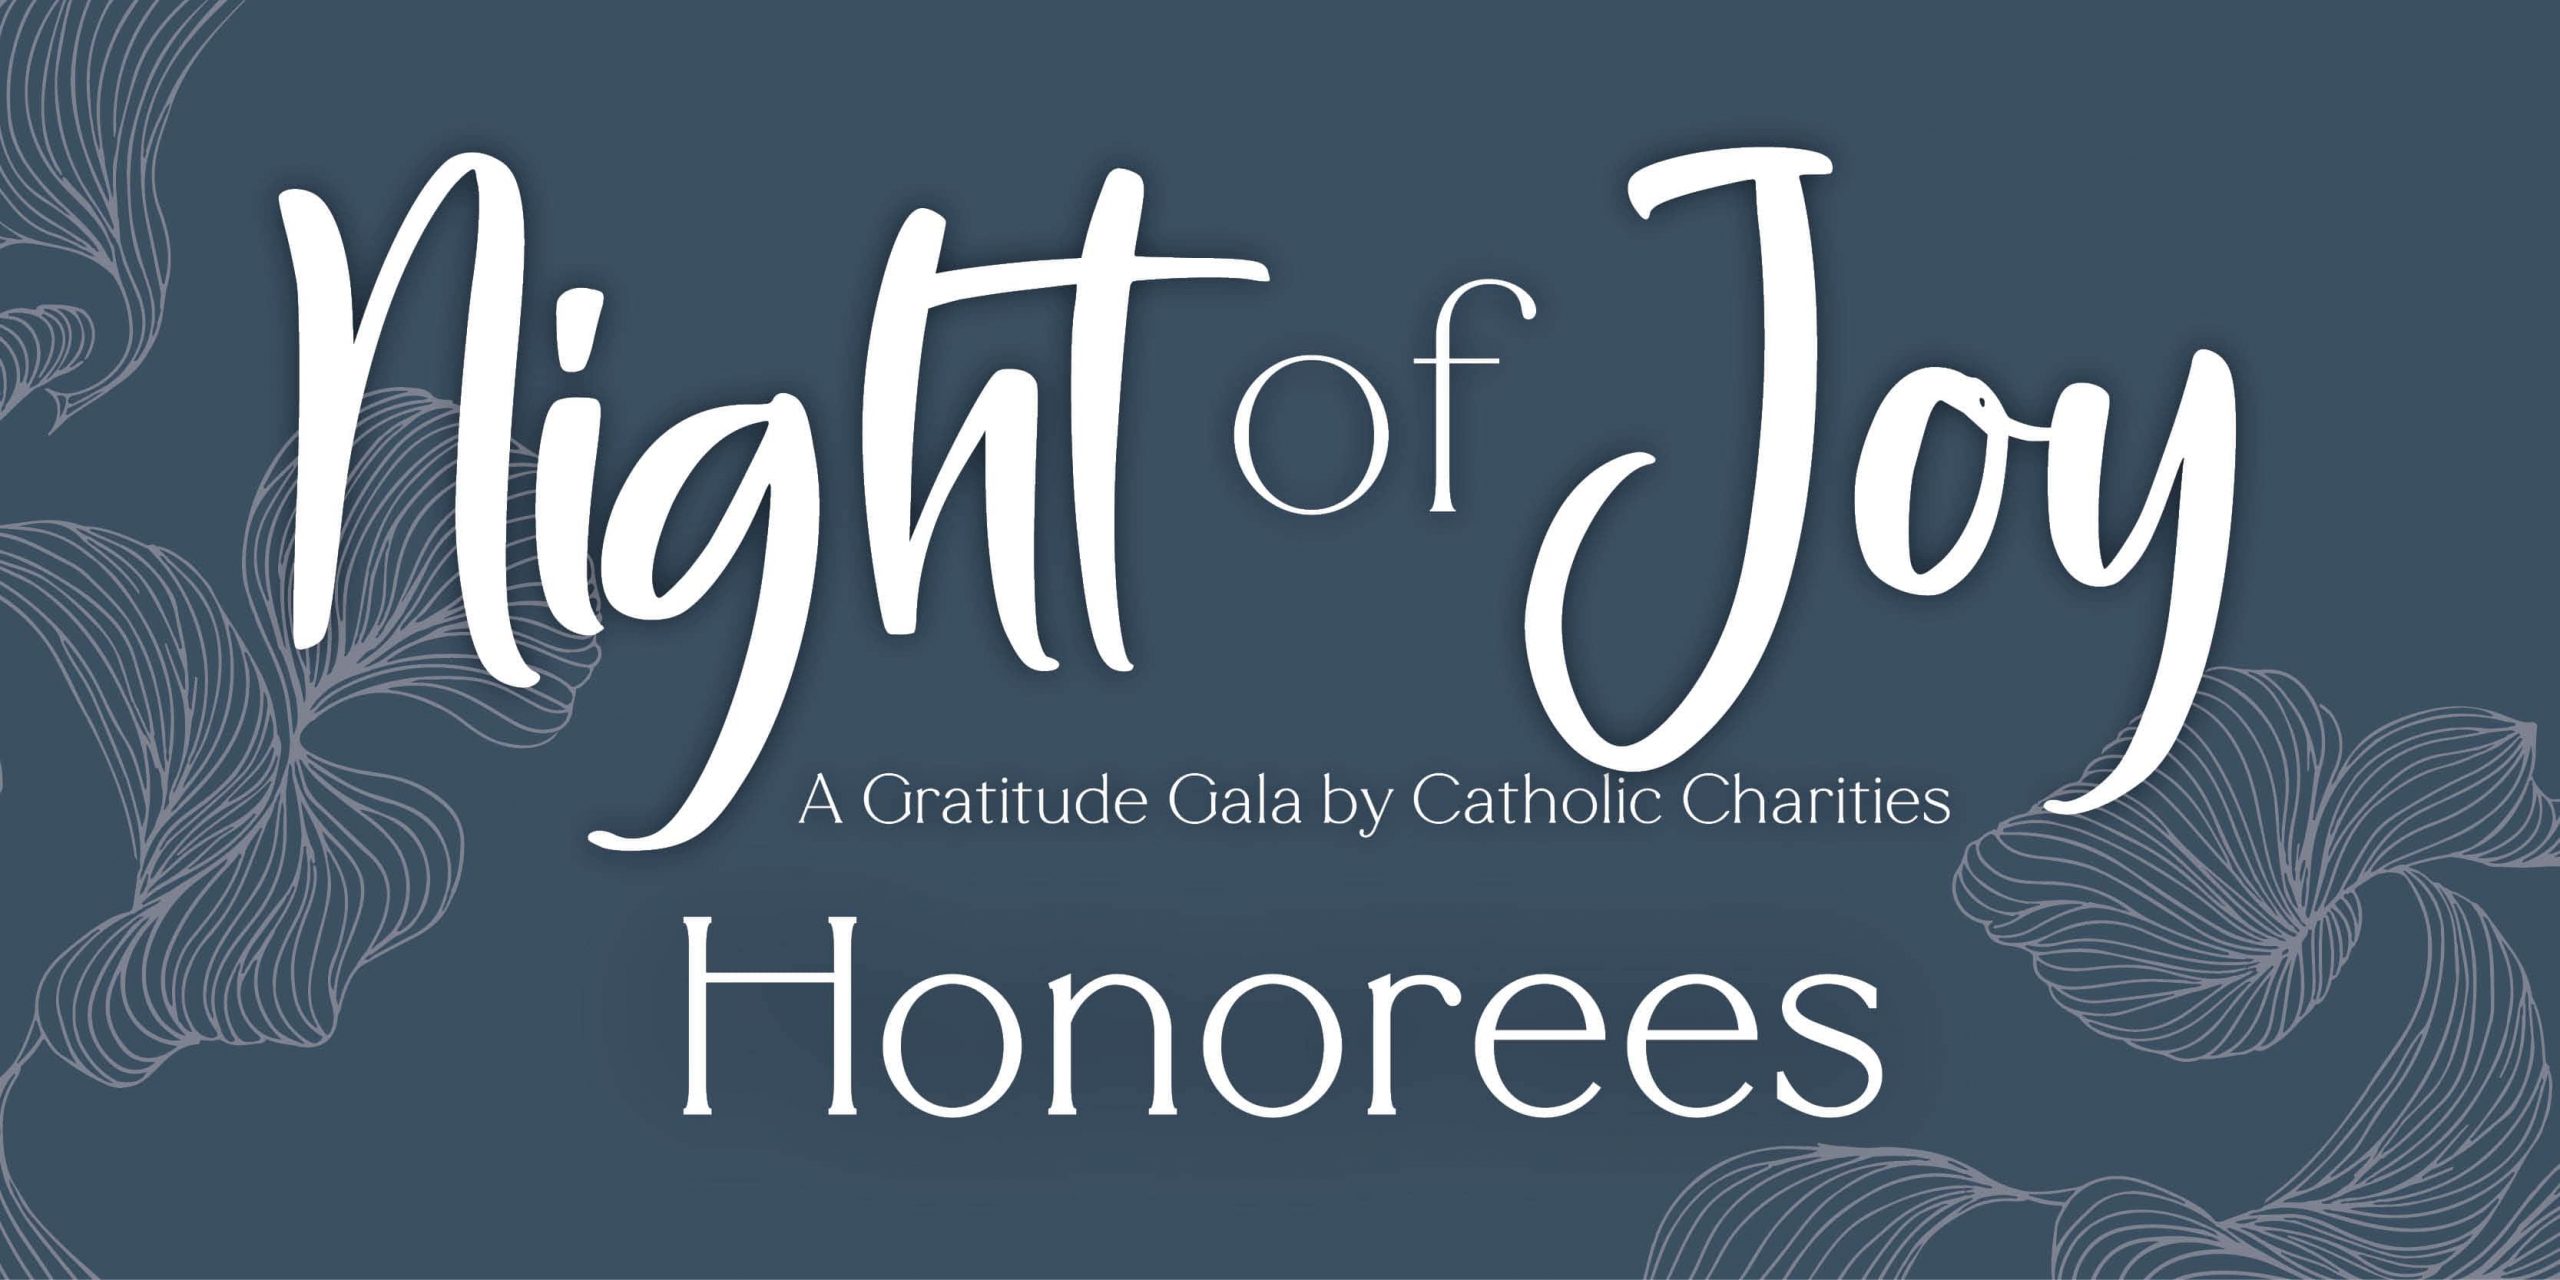 Catholic Charities honors gifts of time, treasure at Night of Joy